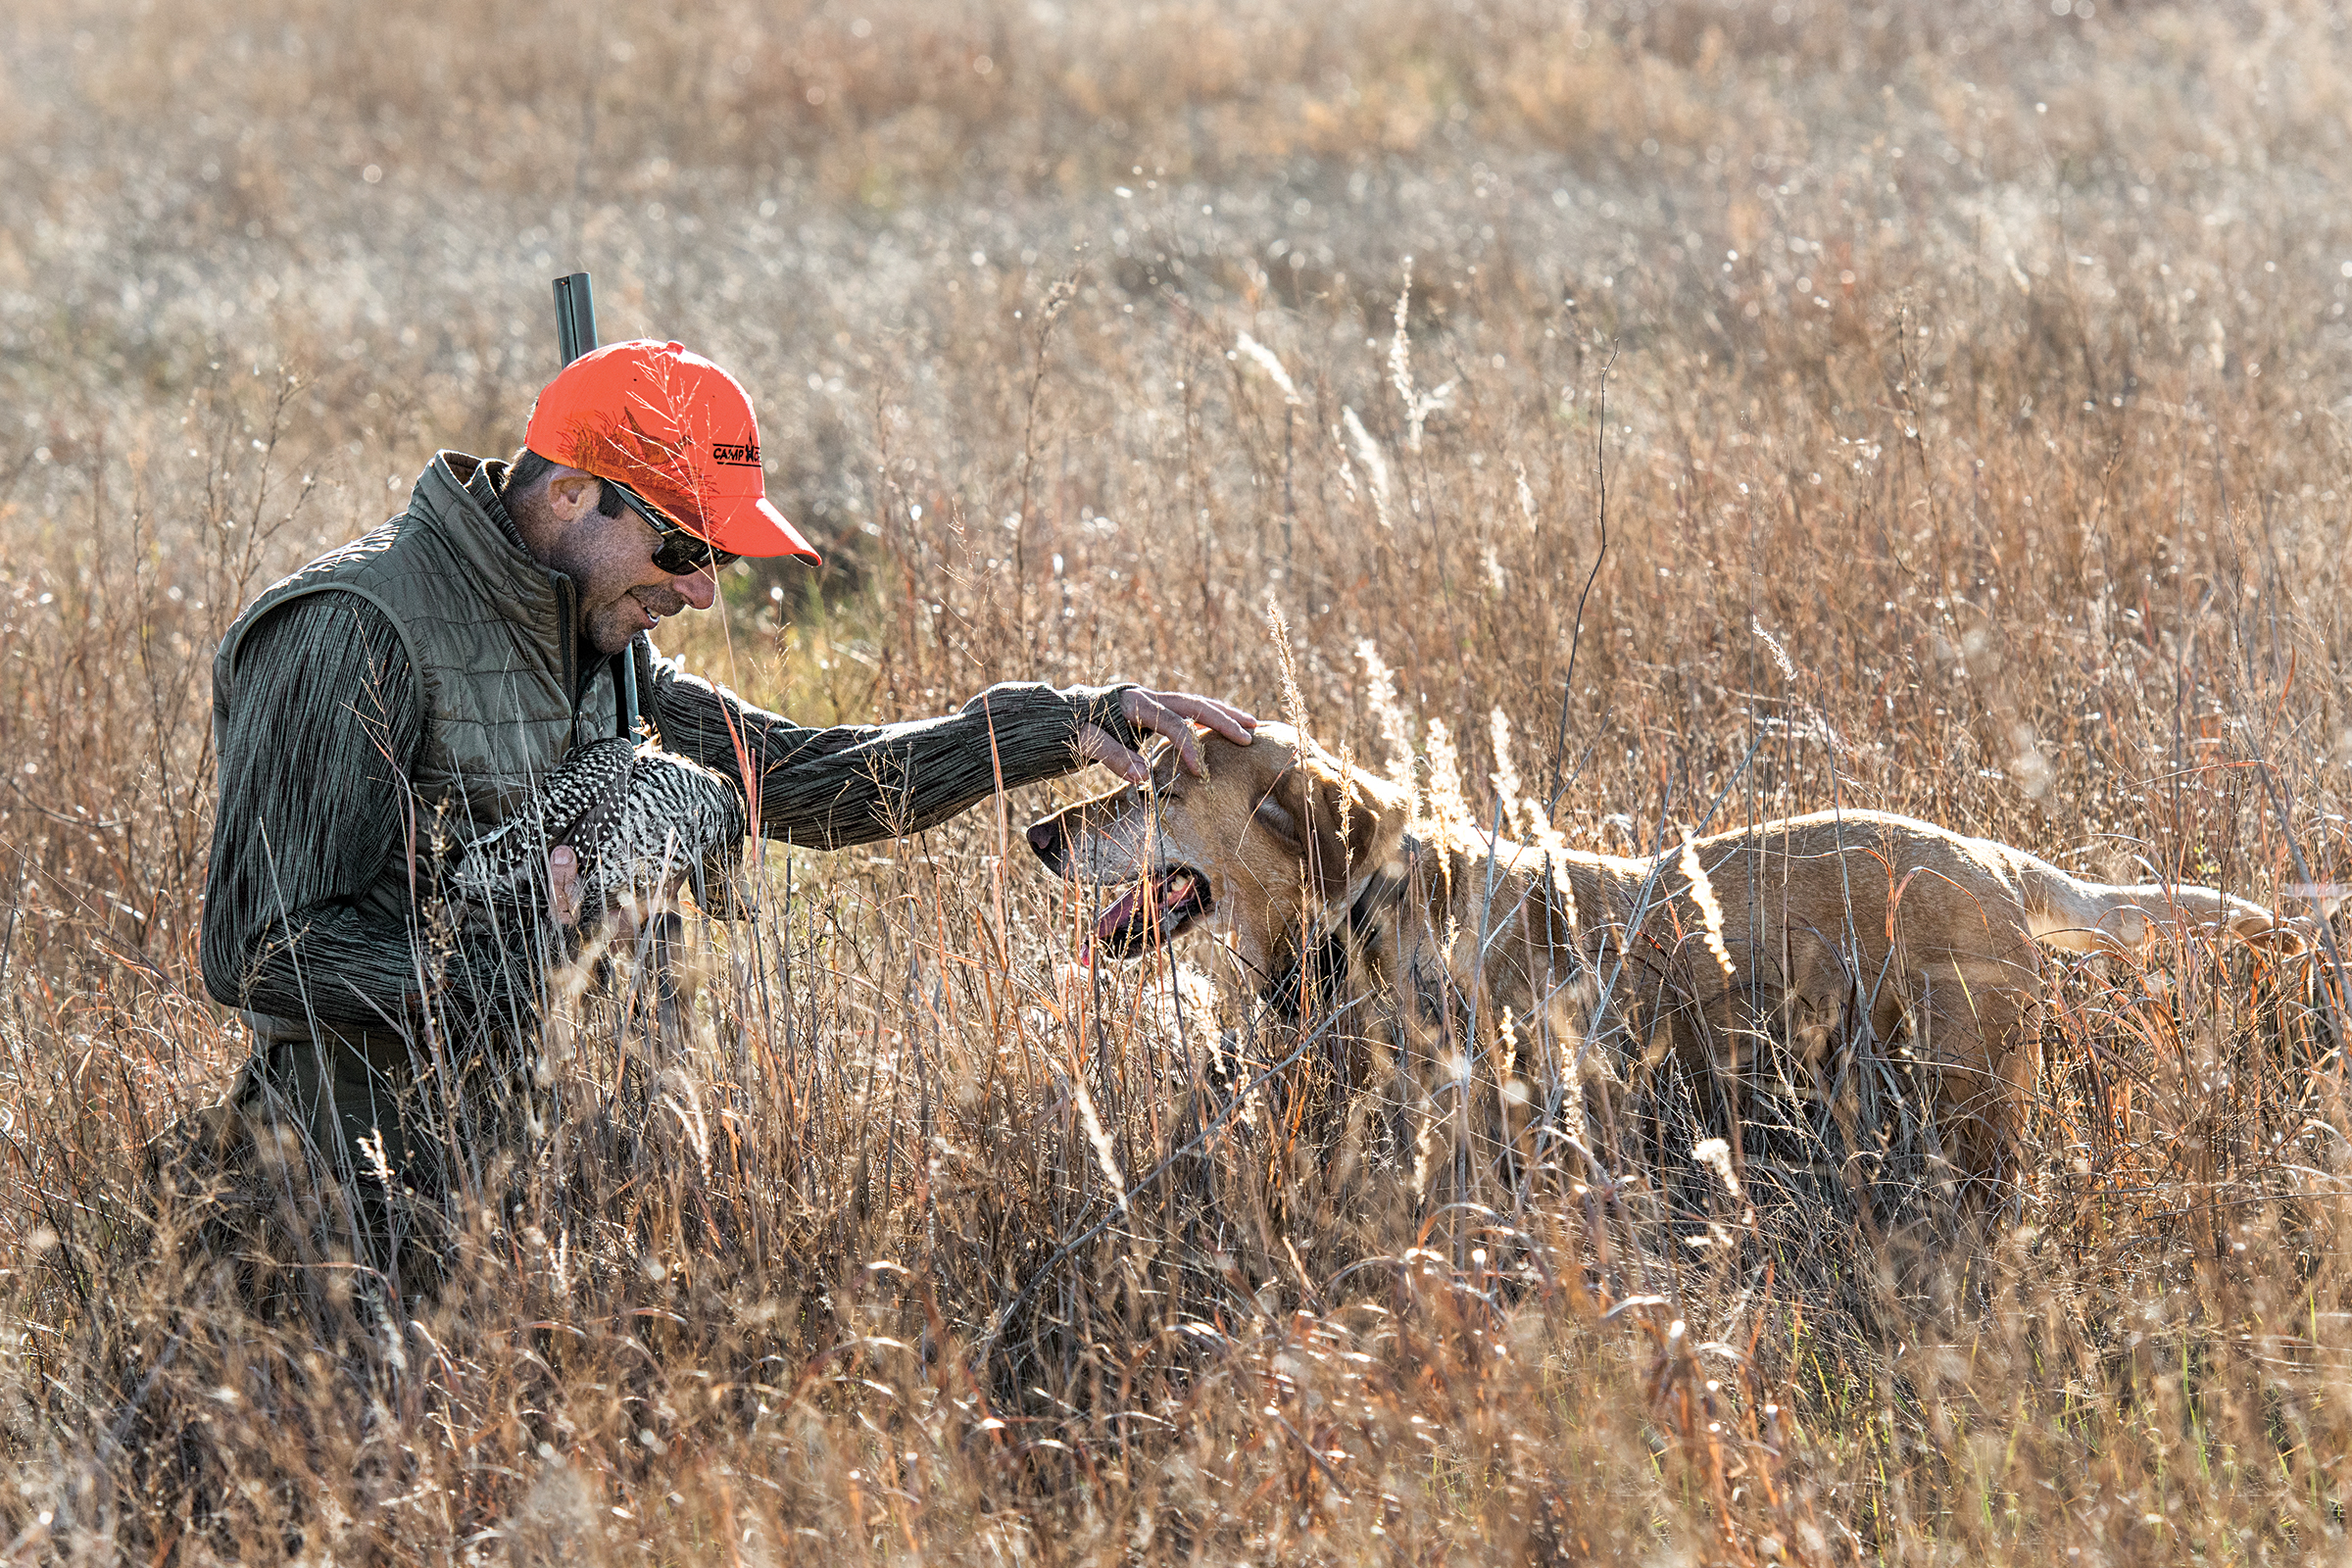 A hunter checks his dog's eyes after retrieving a bird to hand.